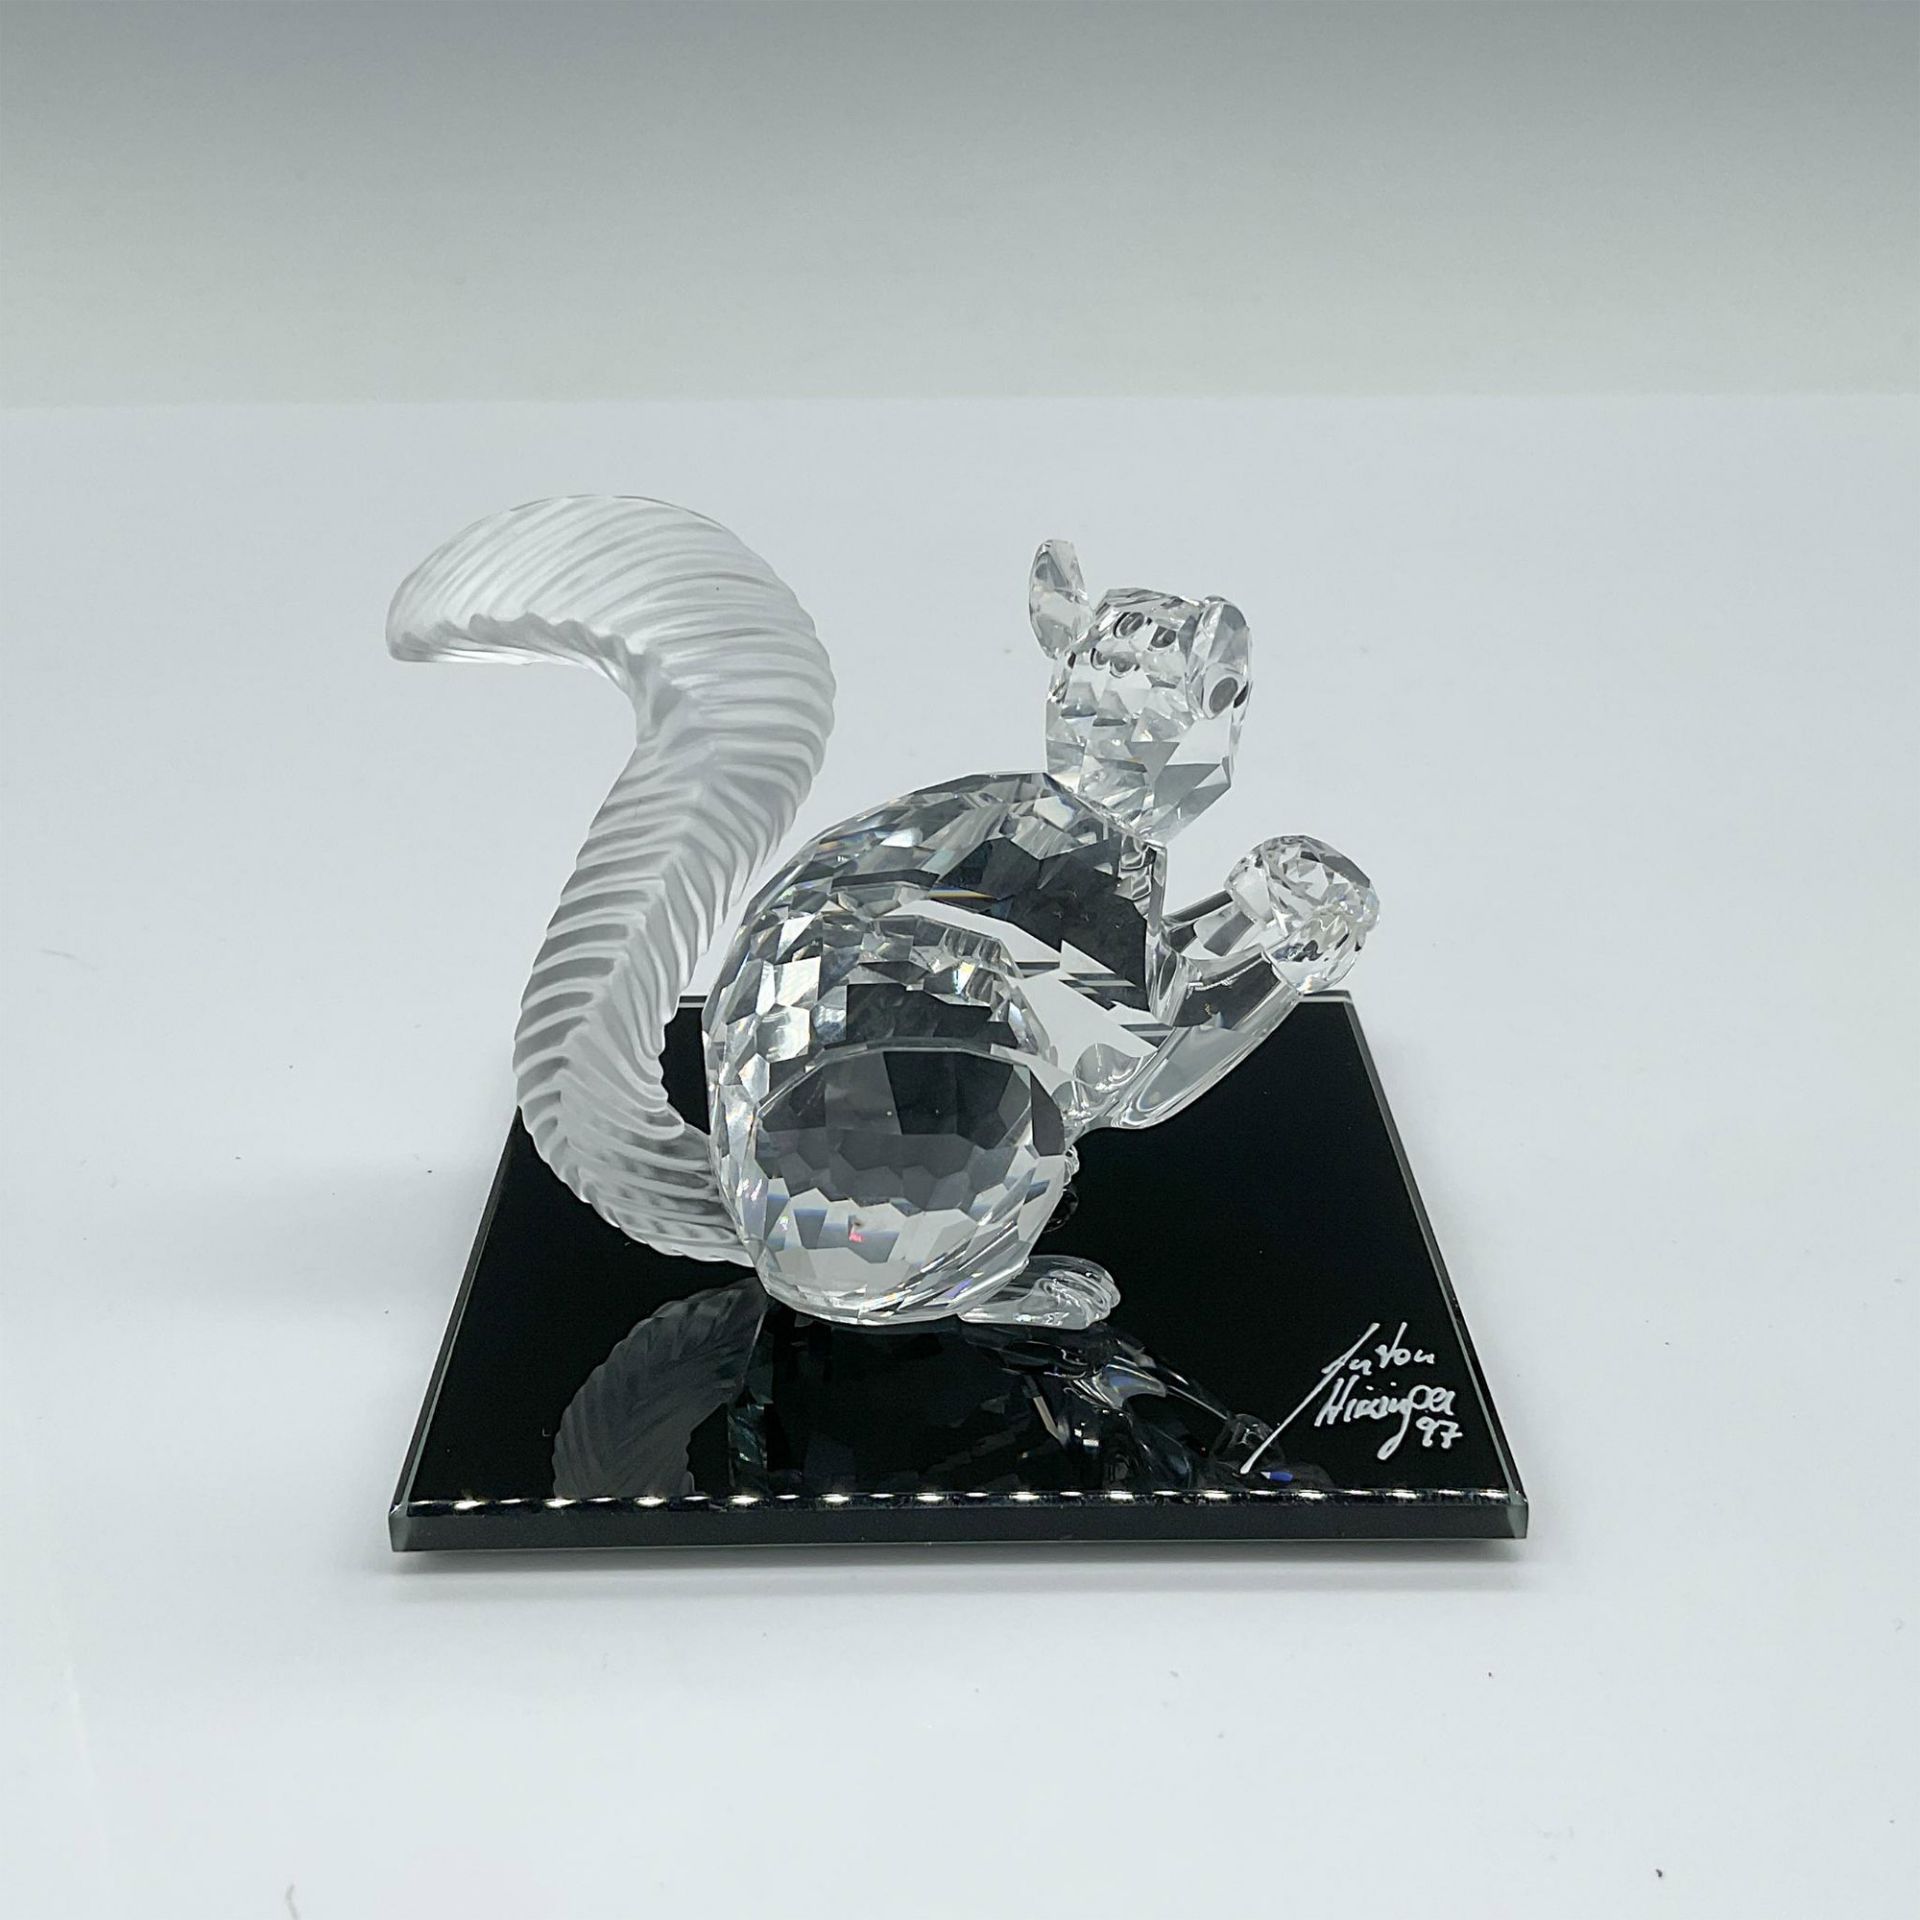 Swarovski SCS Crystal Figurine, Squirrel with Base - Image 2 of 4